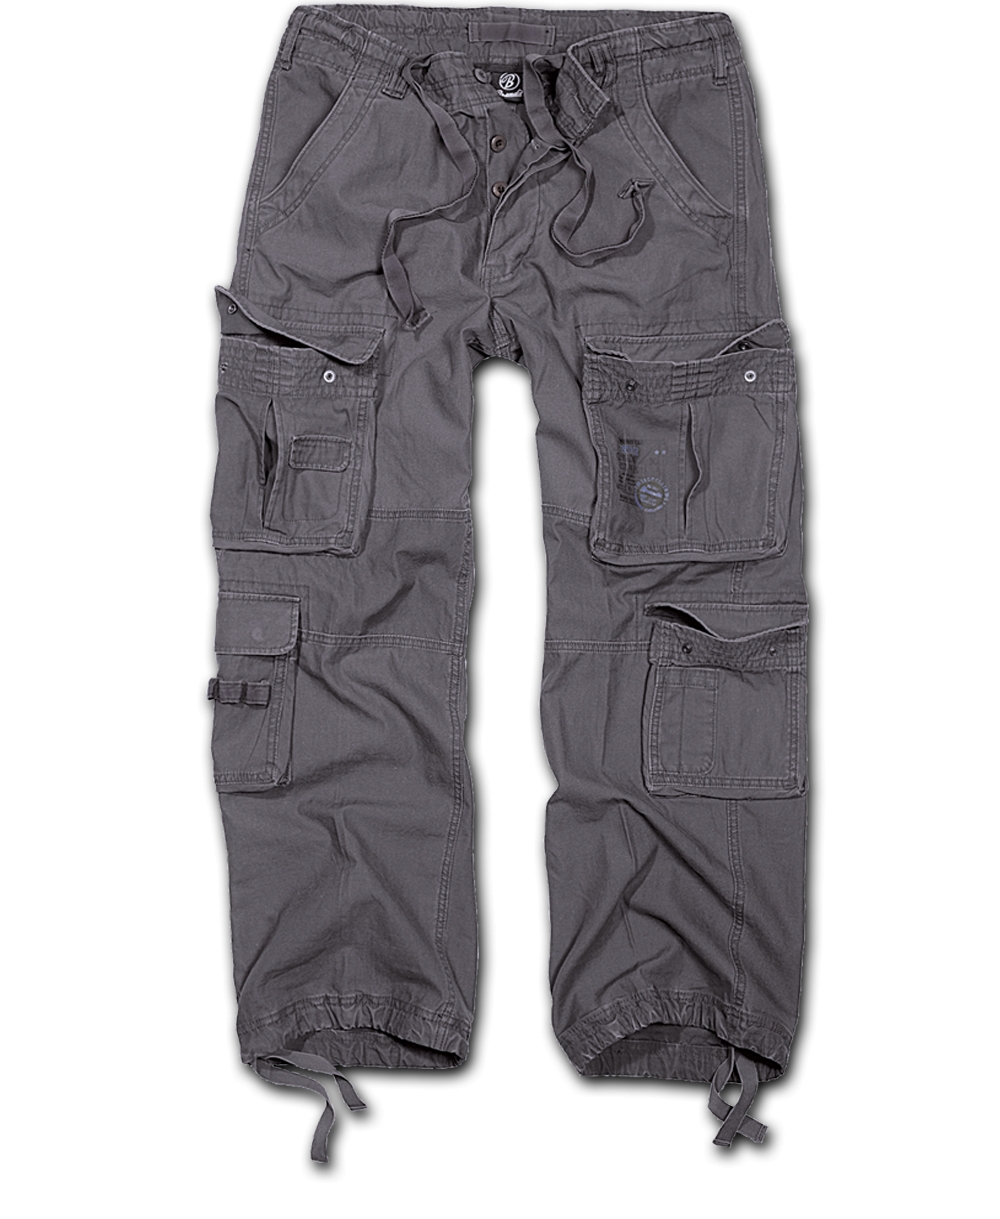 Kalhoty Brandit Pure Vintage - antracitové, L